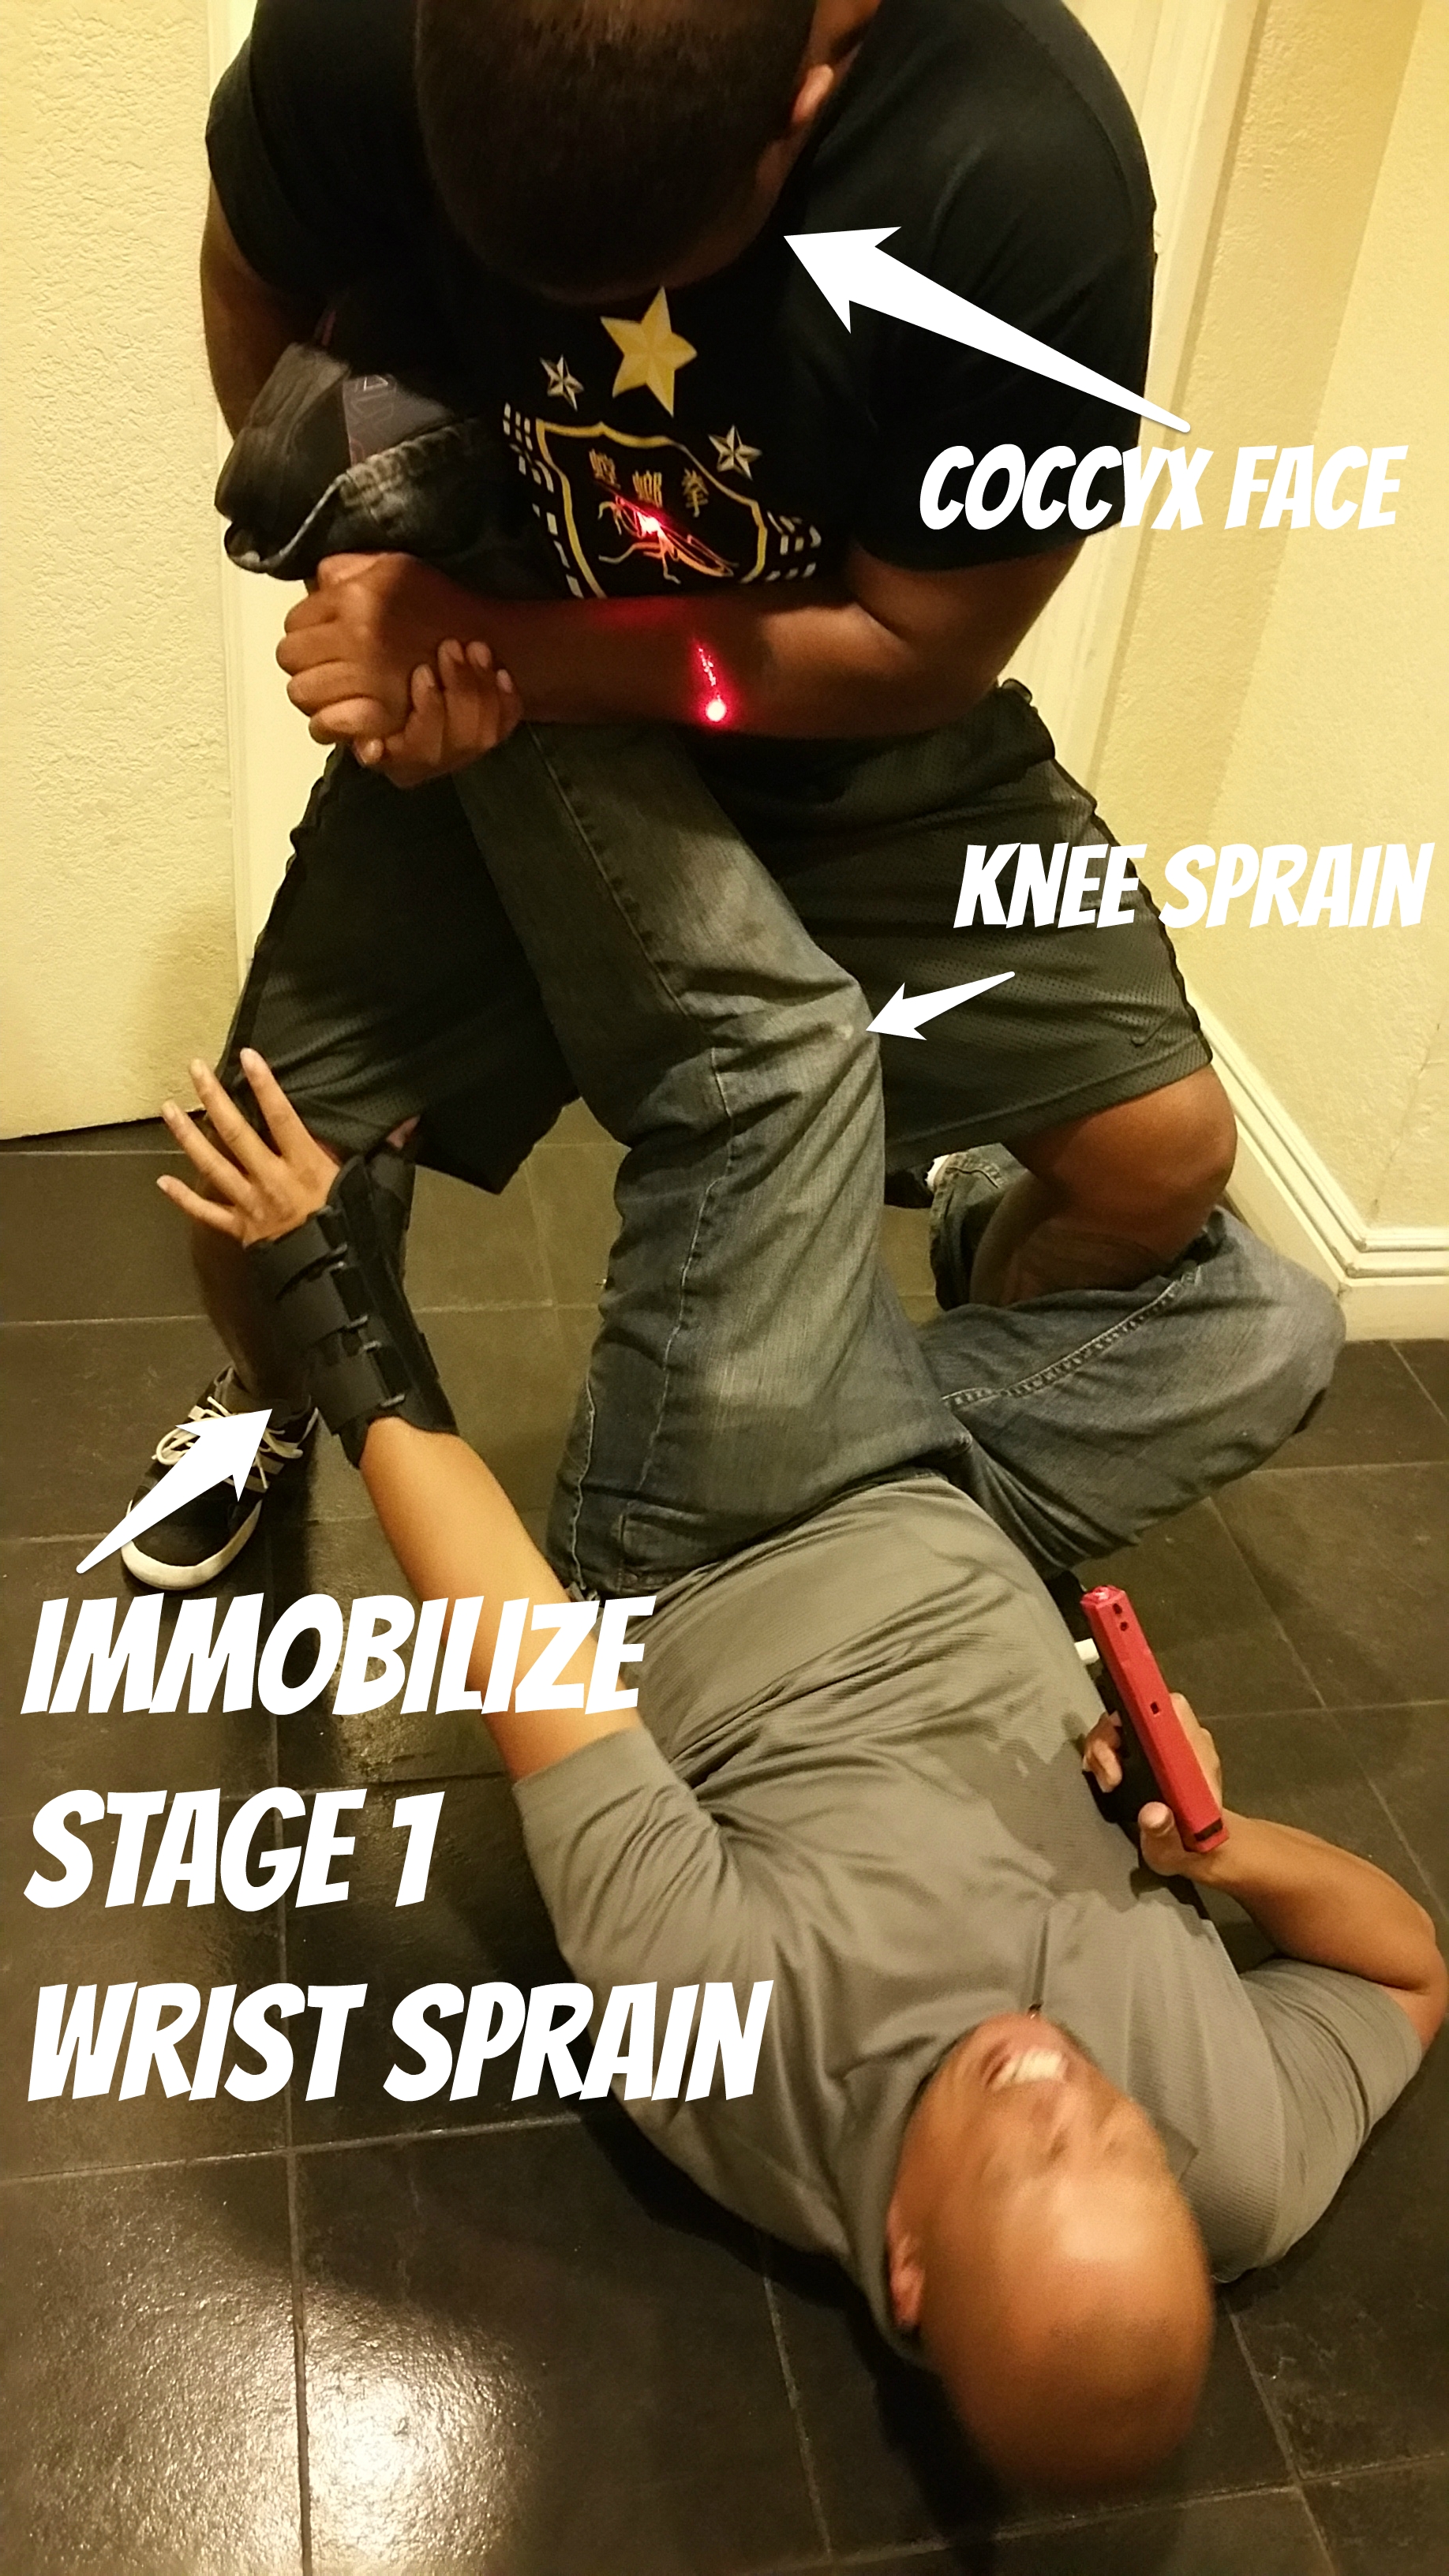 Knee sprain